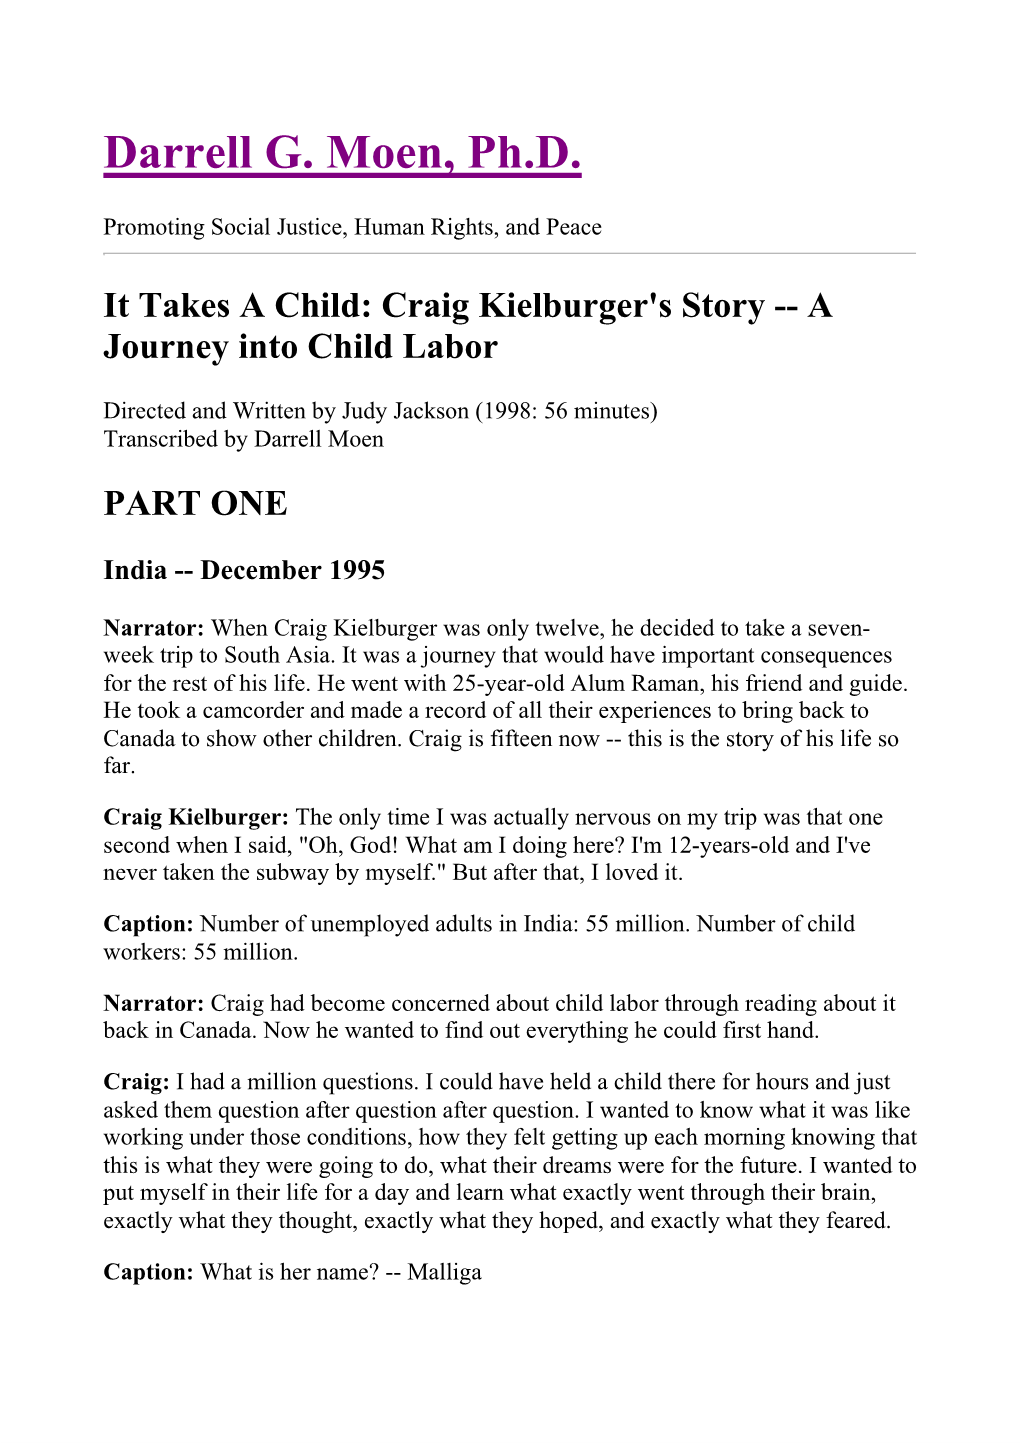 Craig Kielburger's Story -- a Journey Into Child Labor